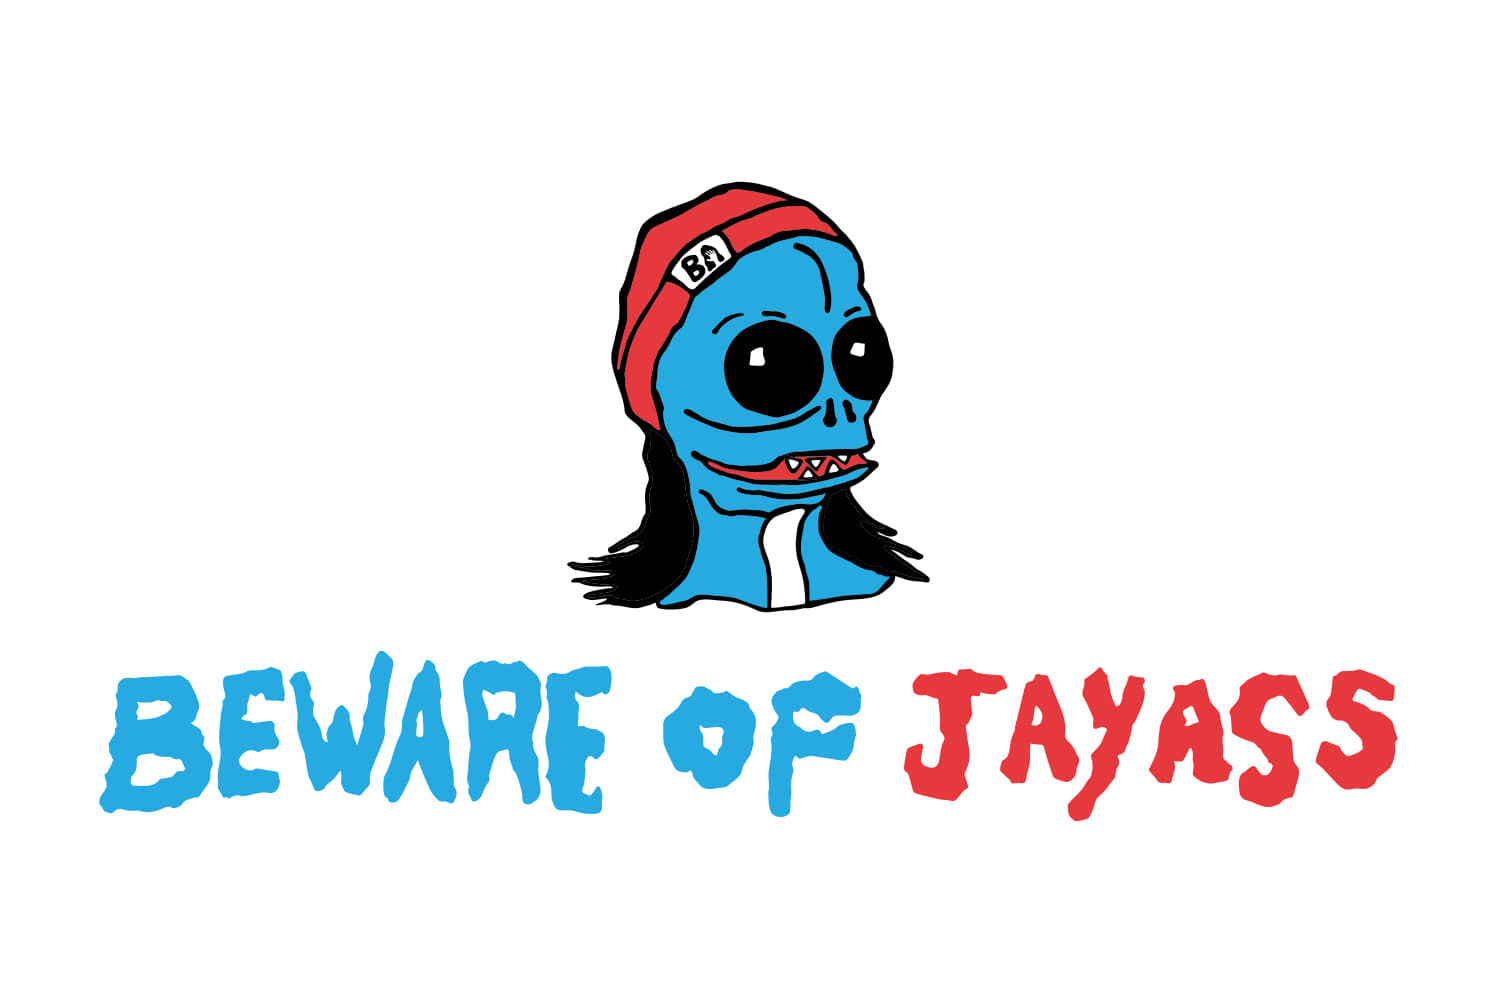 BEWARE OF JAYASS